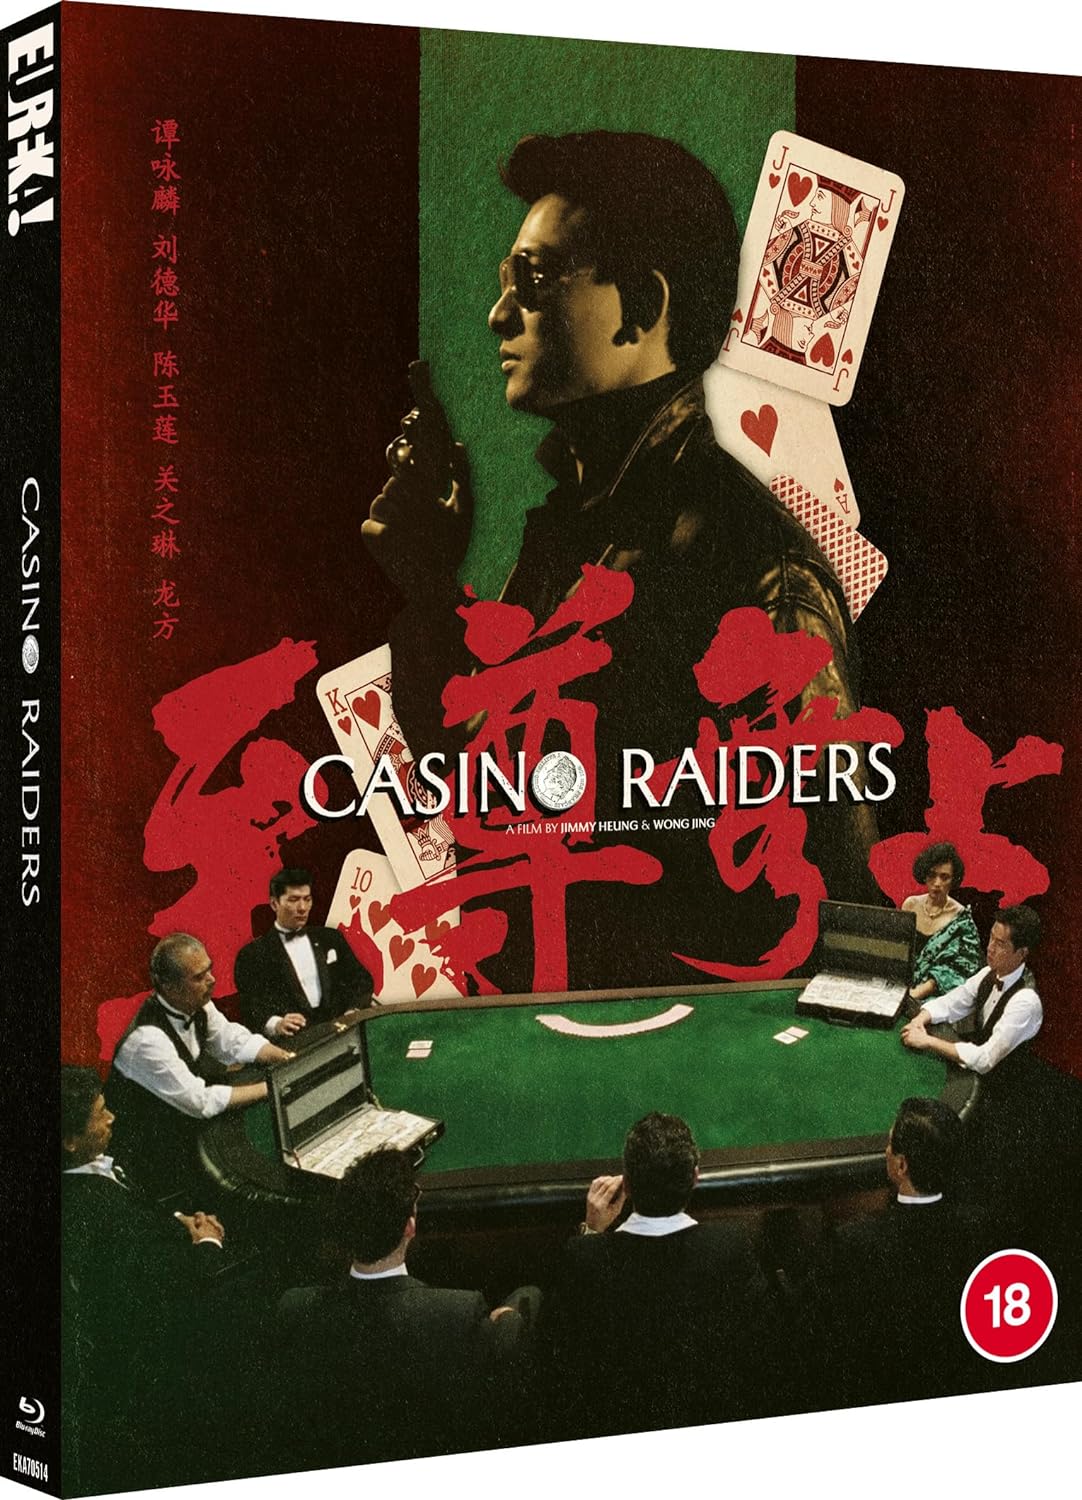 Casino Raiders Limited Edition Blu-ray with Slipcover (Eureka/Region B)